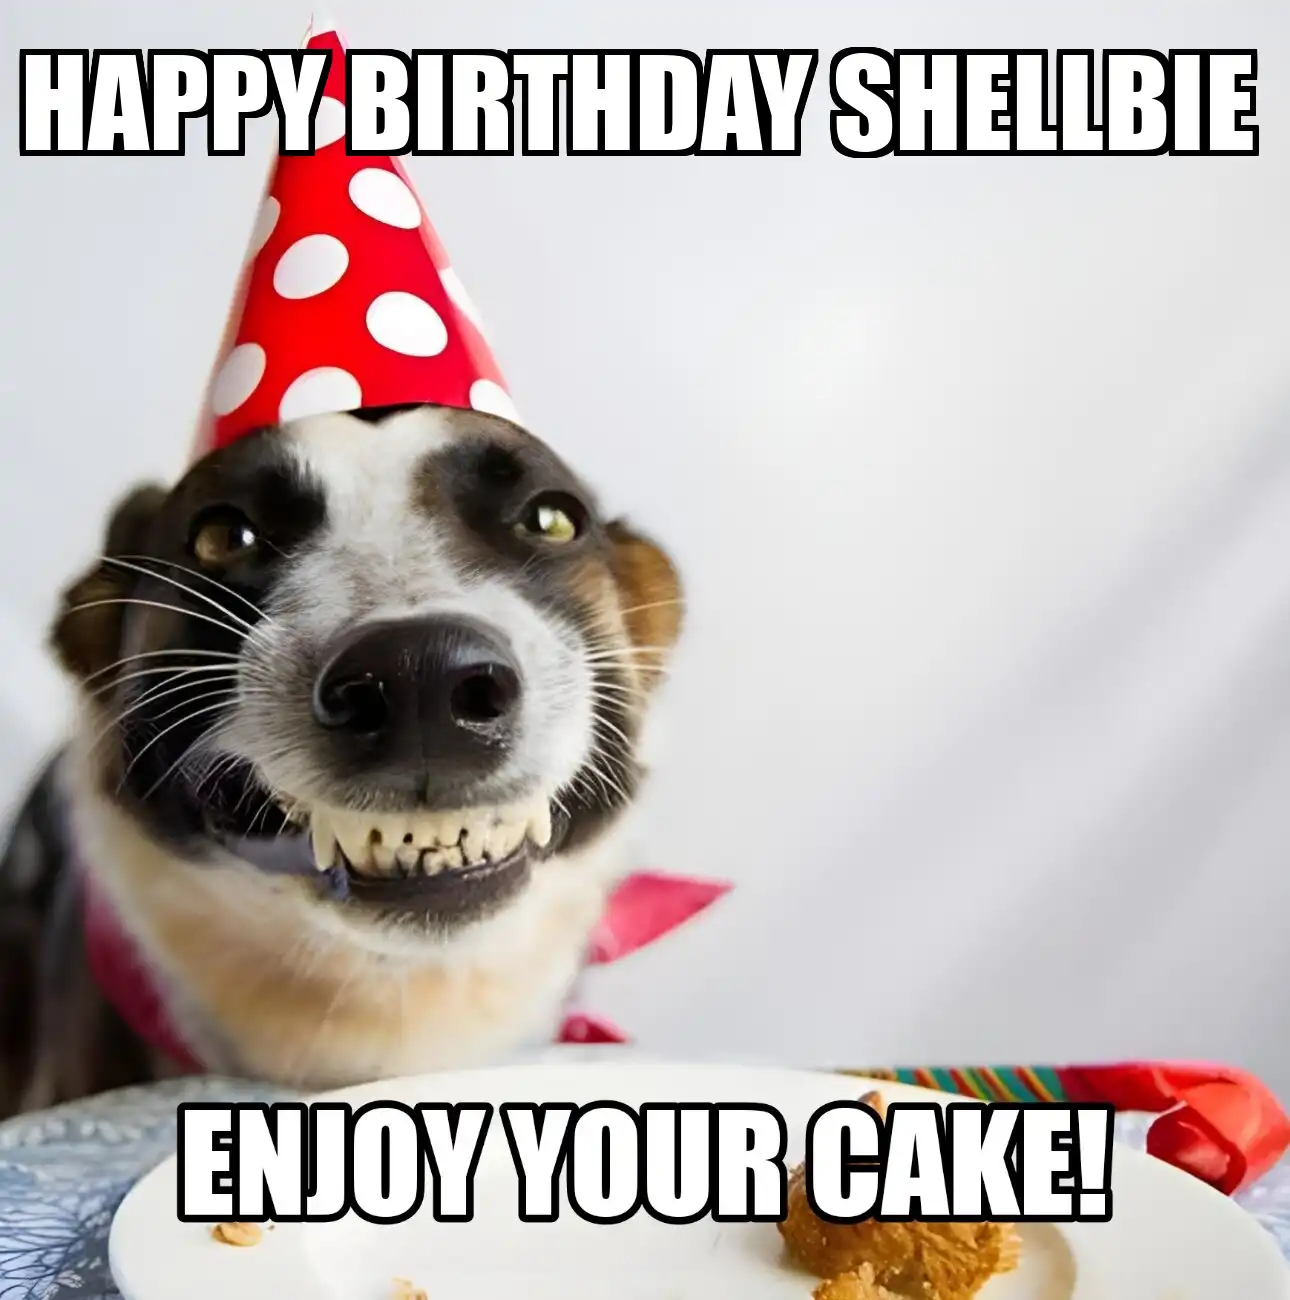 Happy Birthday Shellbie Enjoy Your Cake Dog Meme